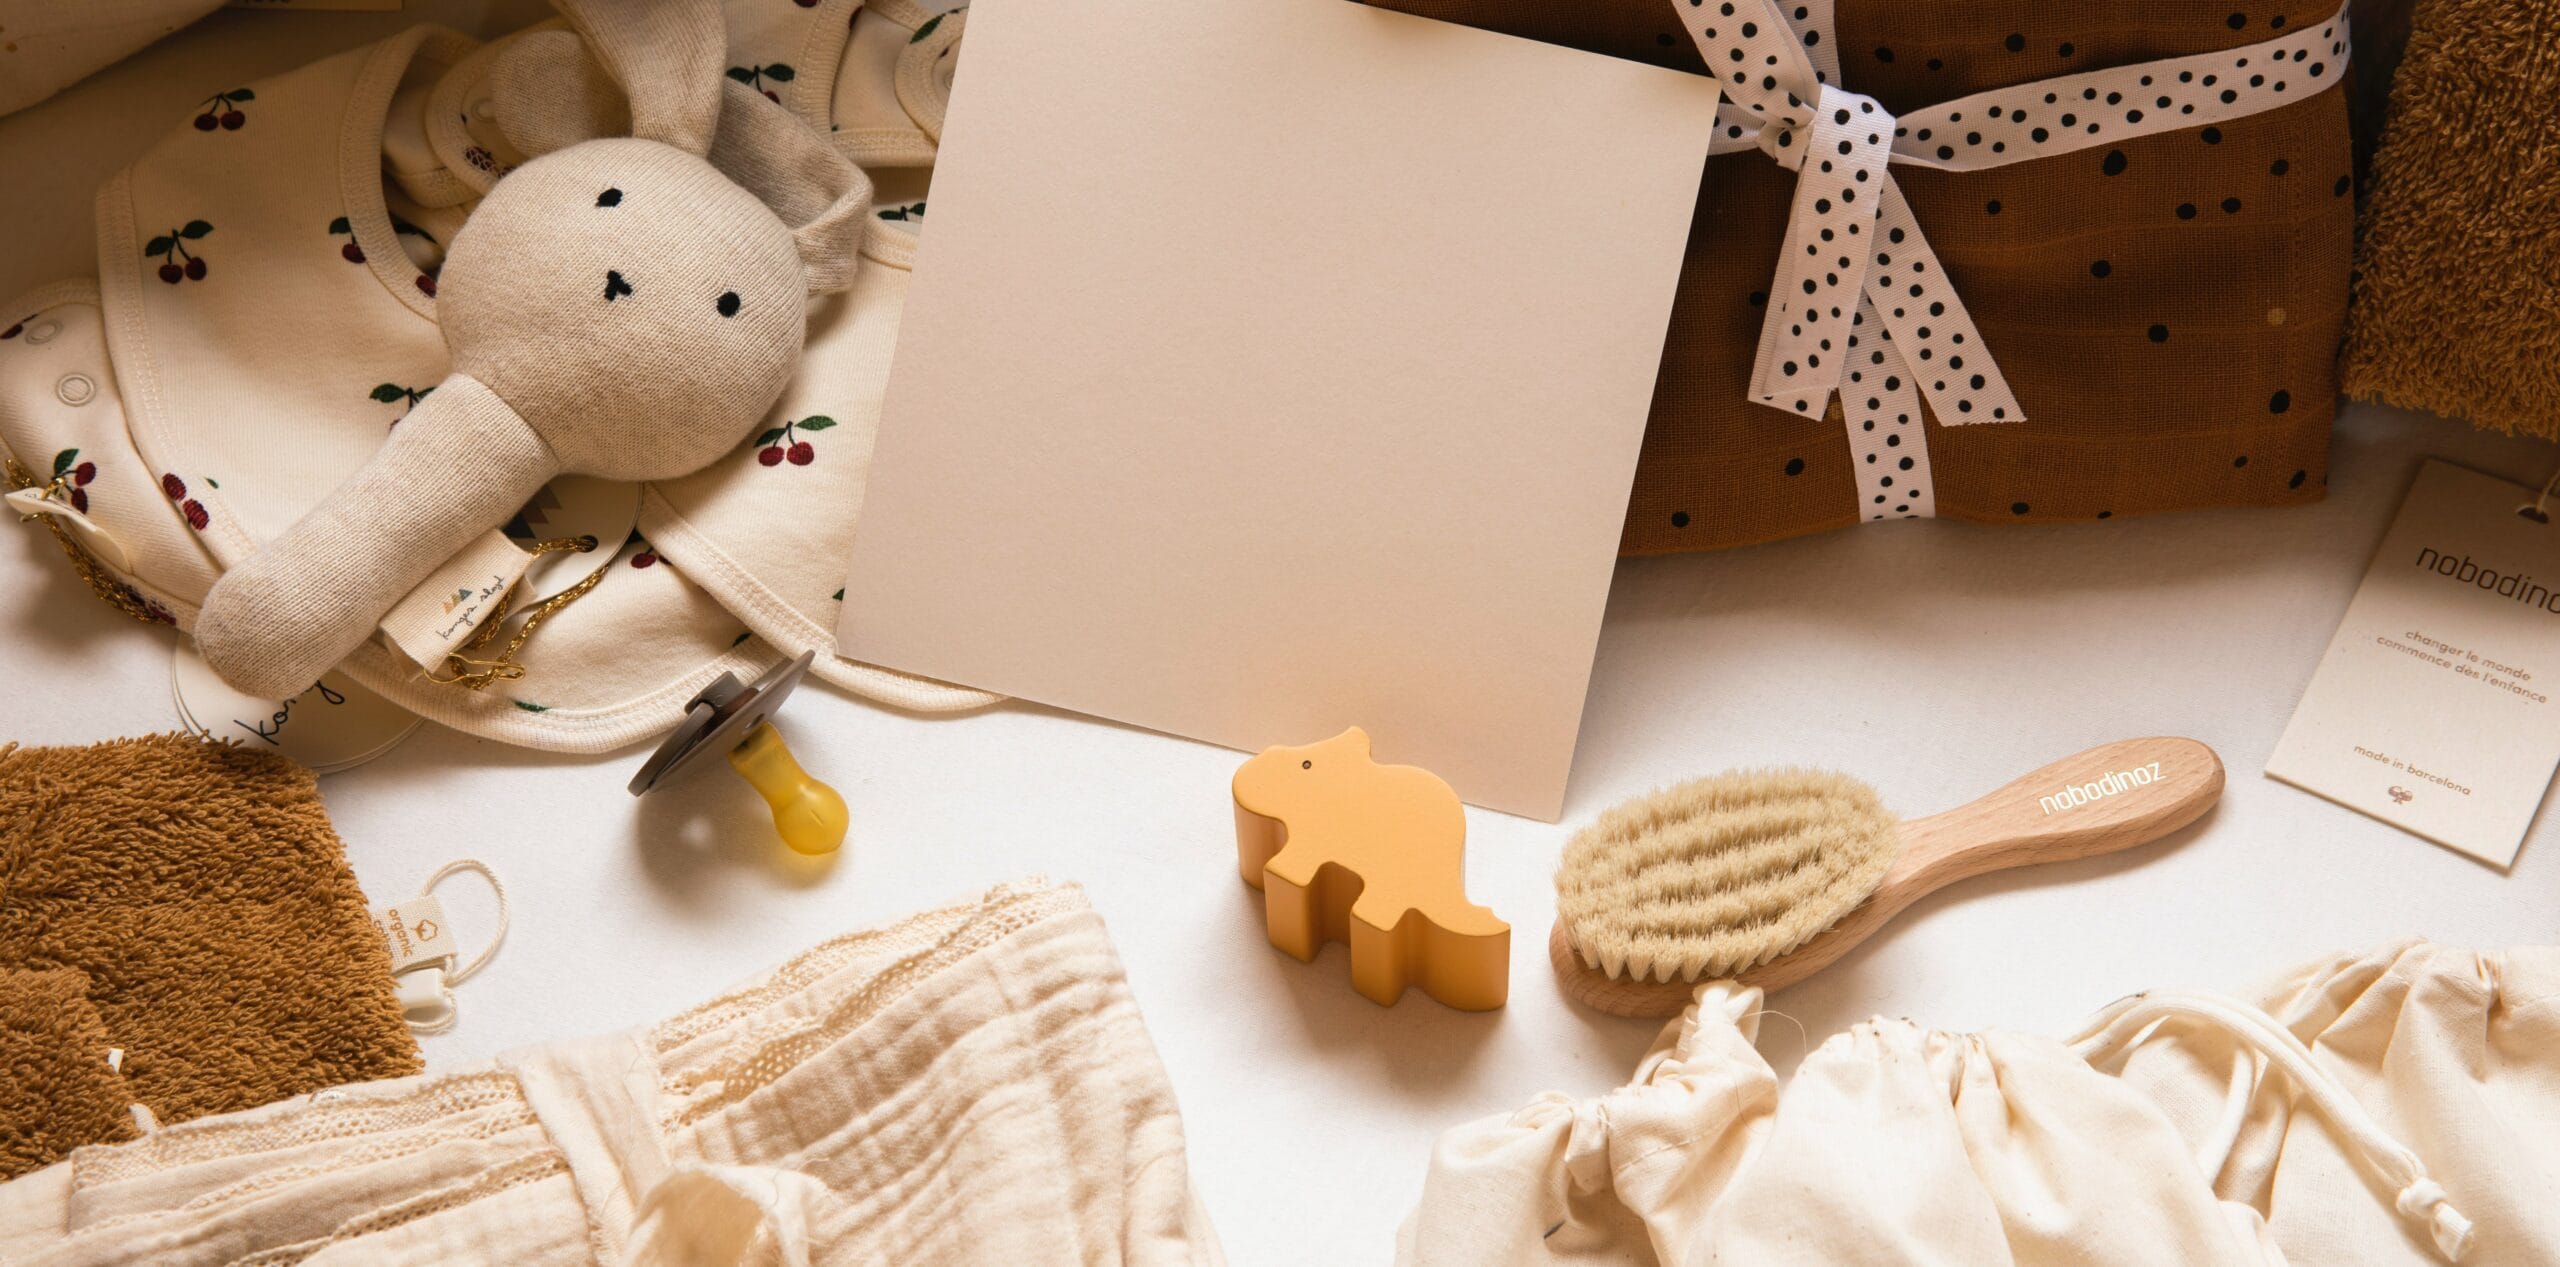 7 original gift ideas for new parents